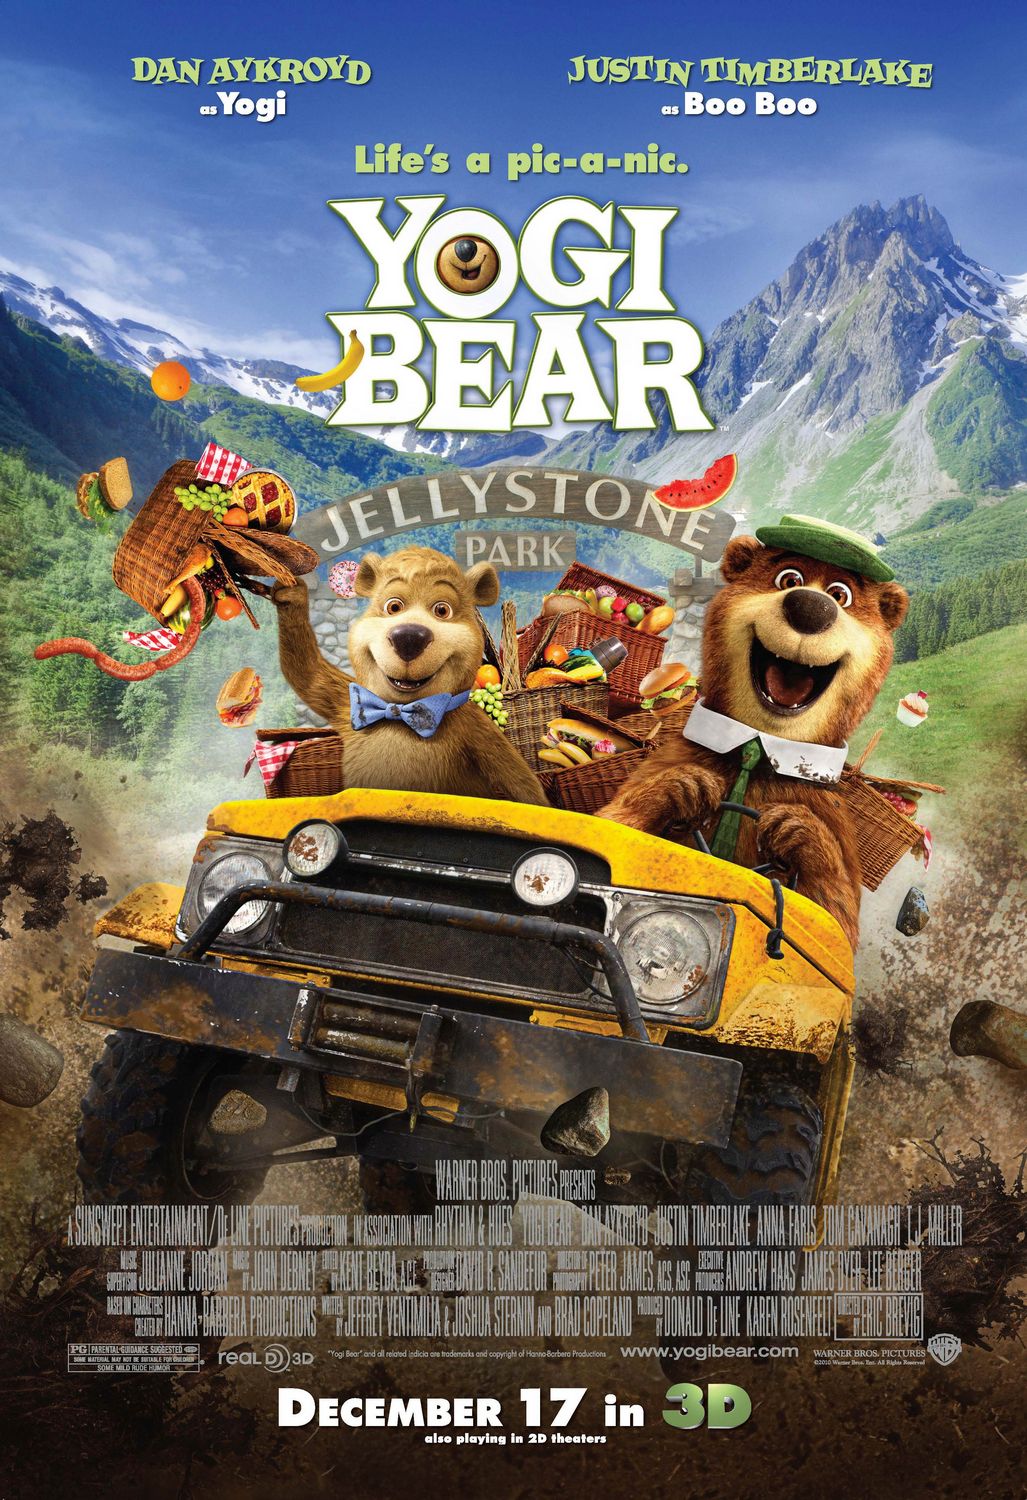 Yogi Bear (film), Warner Bros. Entertainment Wiki